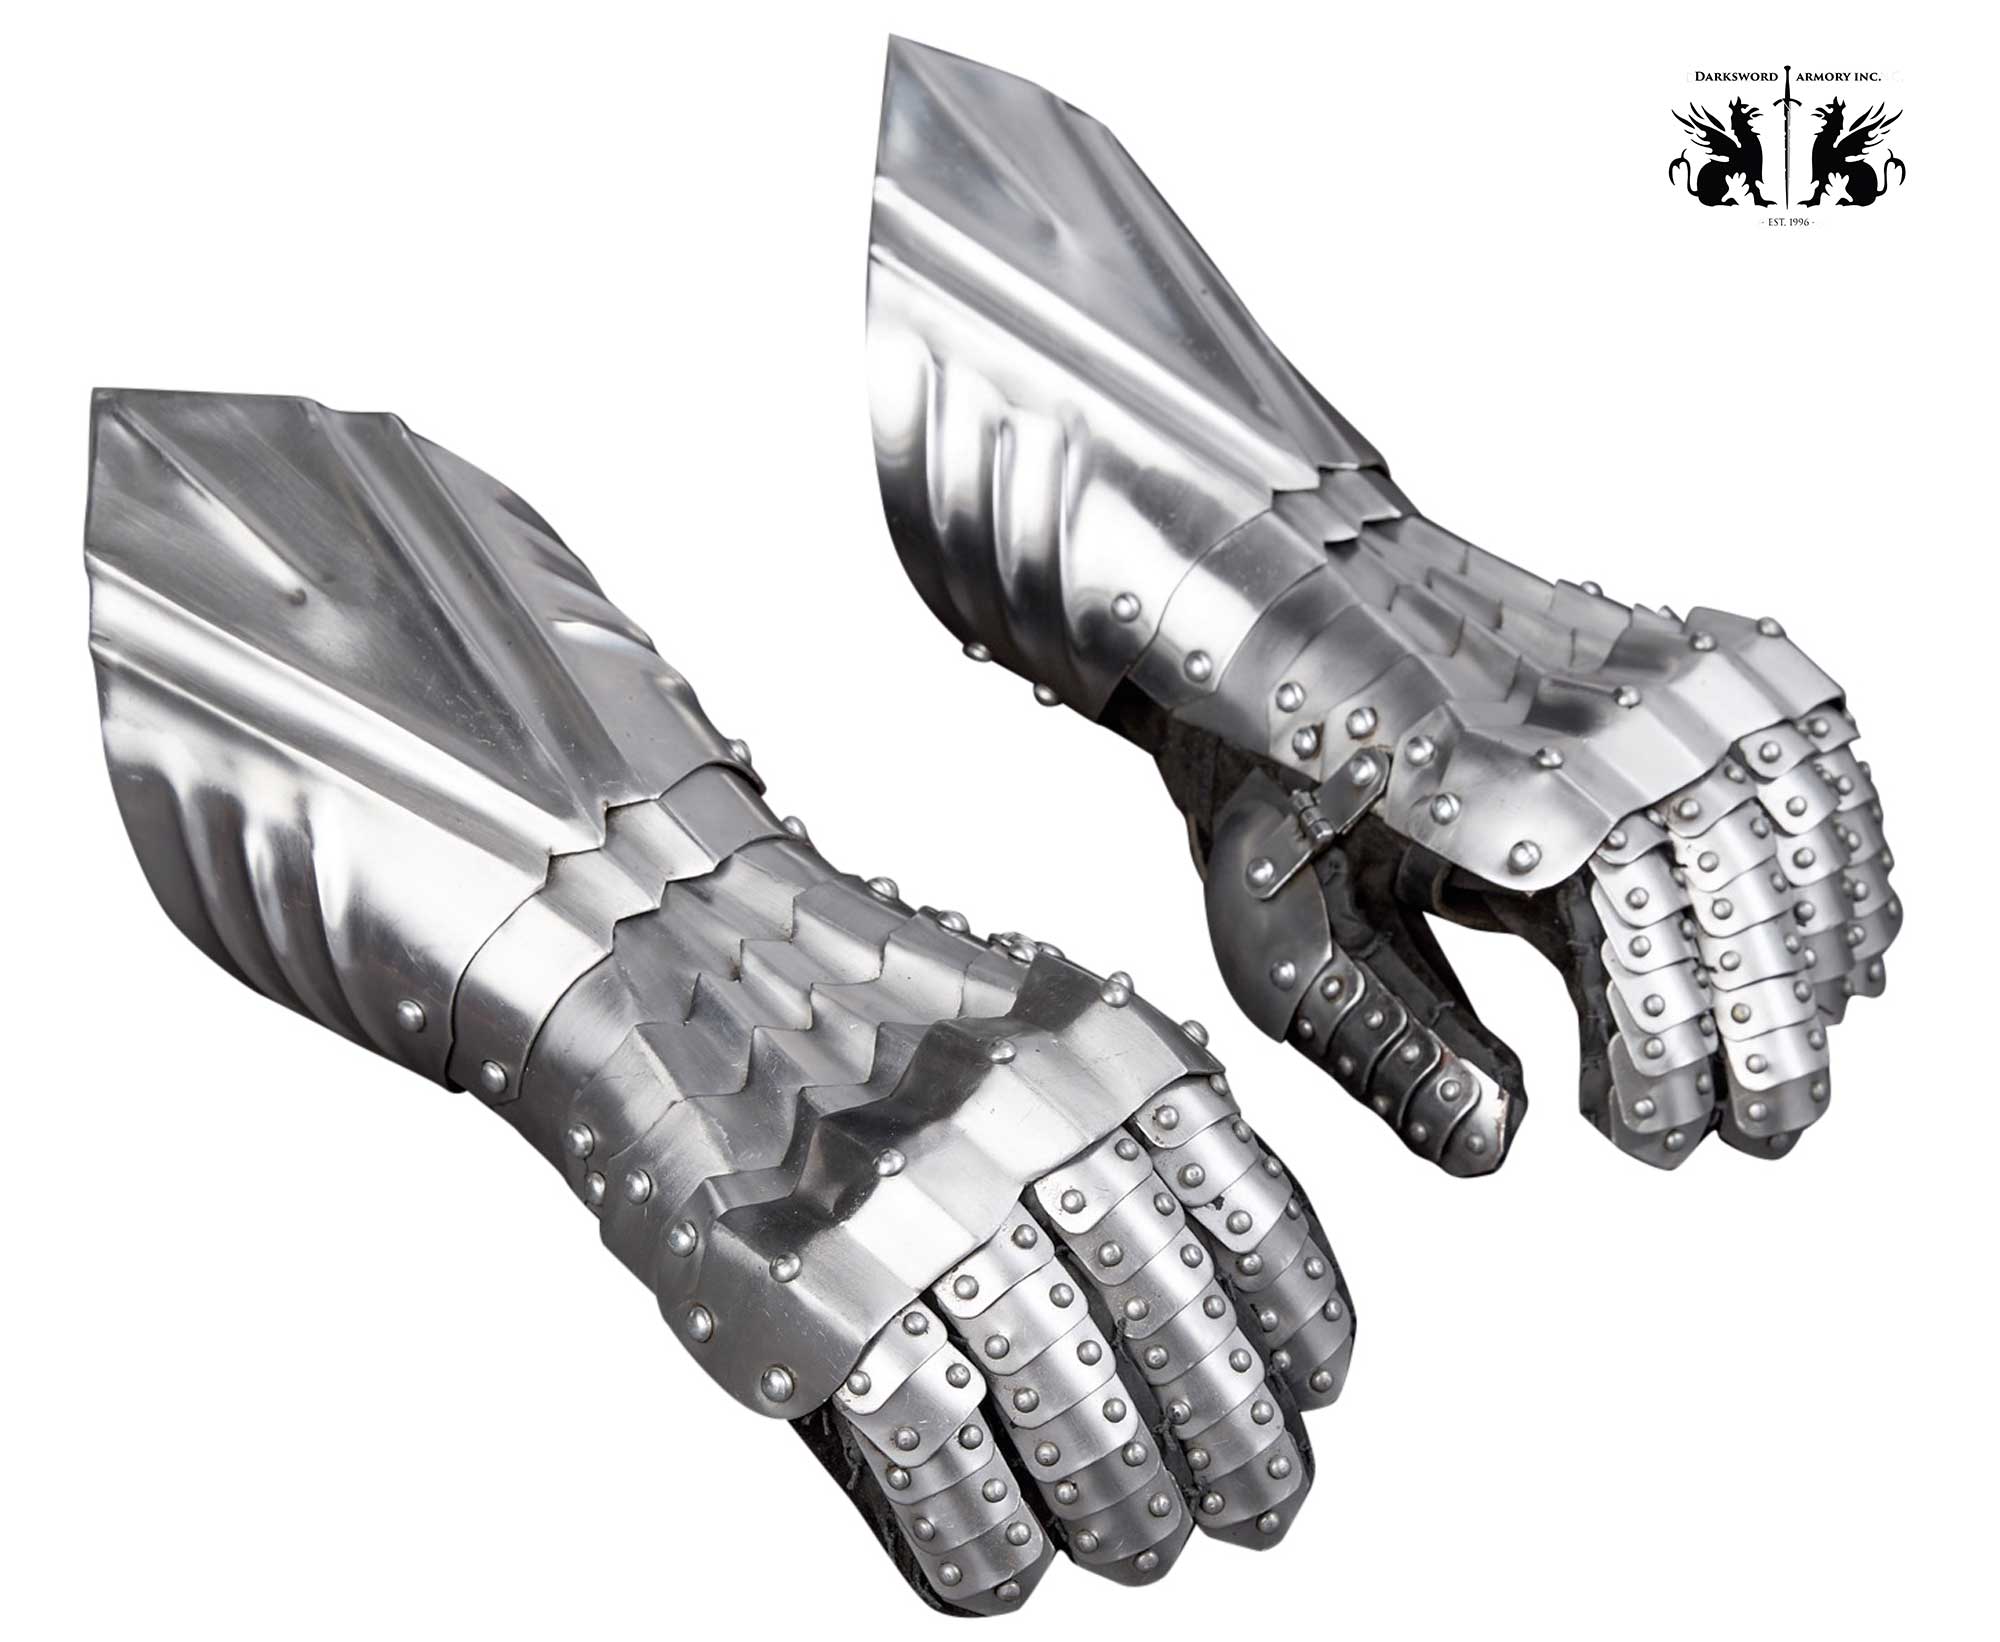 Splatter Gloves - Super Sticky - White and Black - Dmaxx Sports